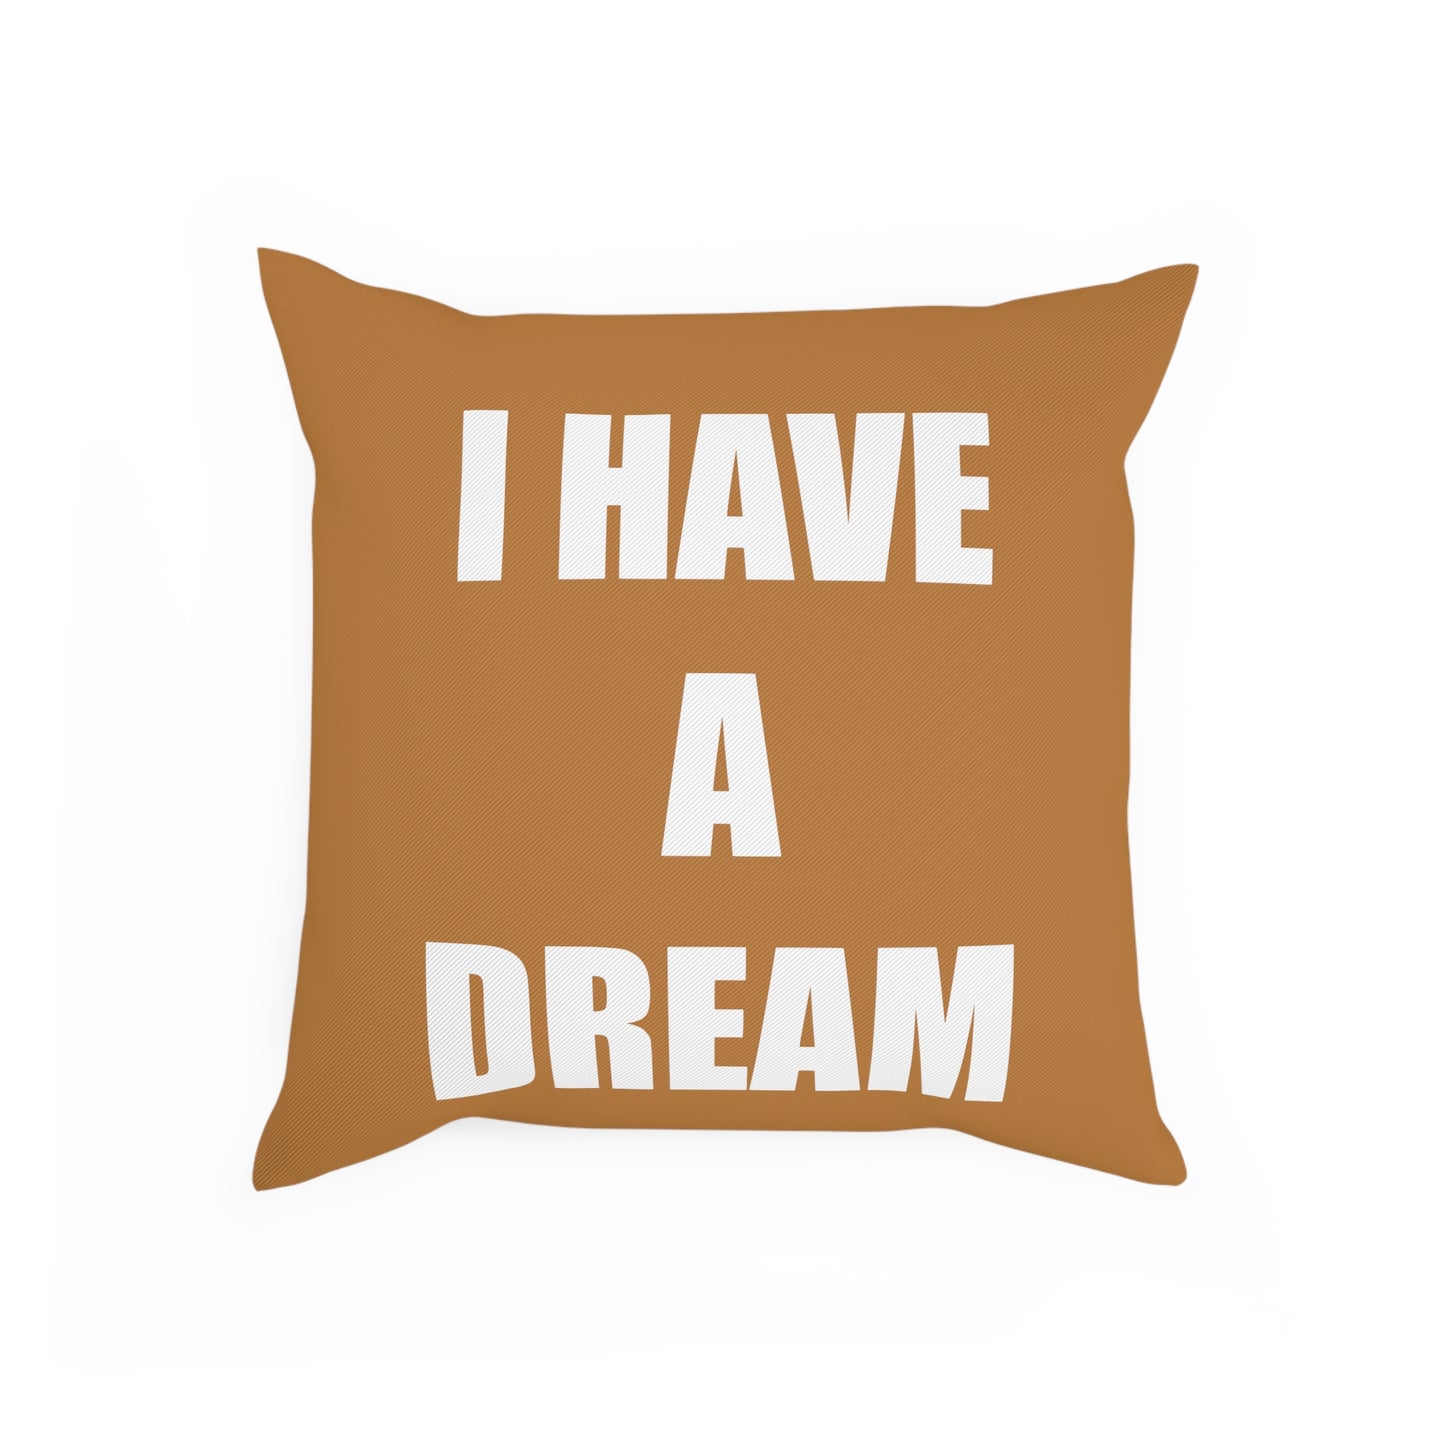 Caramel "I HAVE A DREAM" Cushion